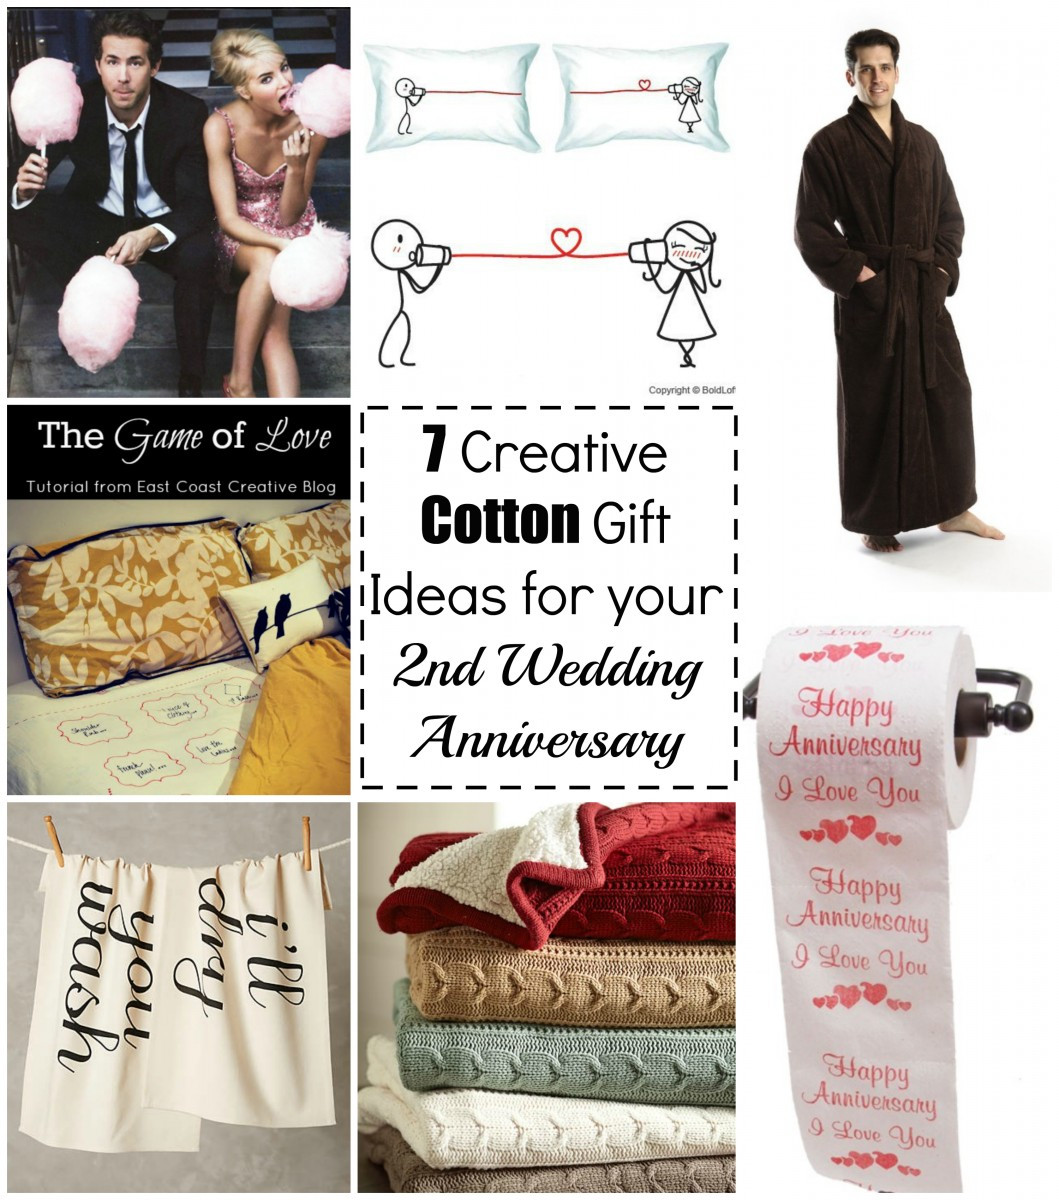 2nd Wedding Anniversary Gift
 7 Cotton Gift Ideas for your 2nd Wedding Anniversary